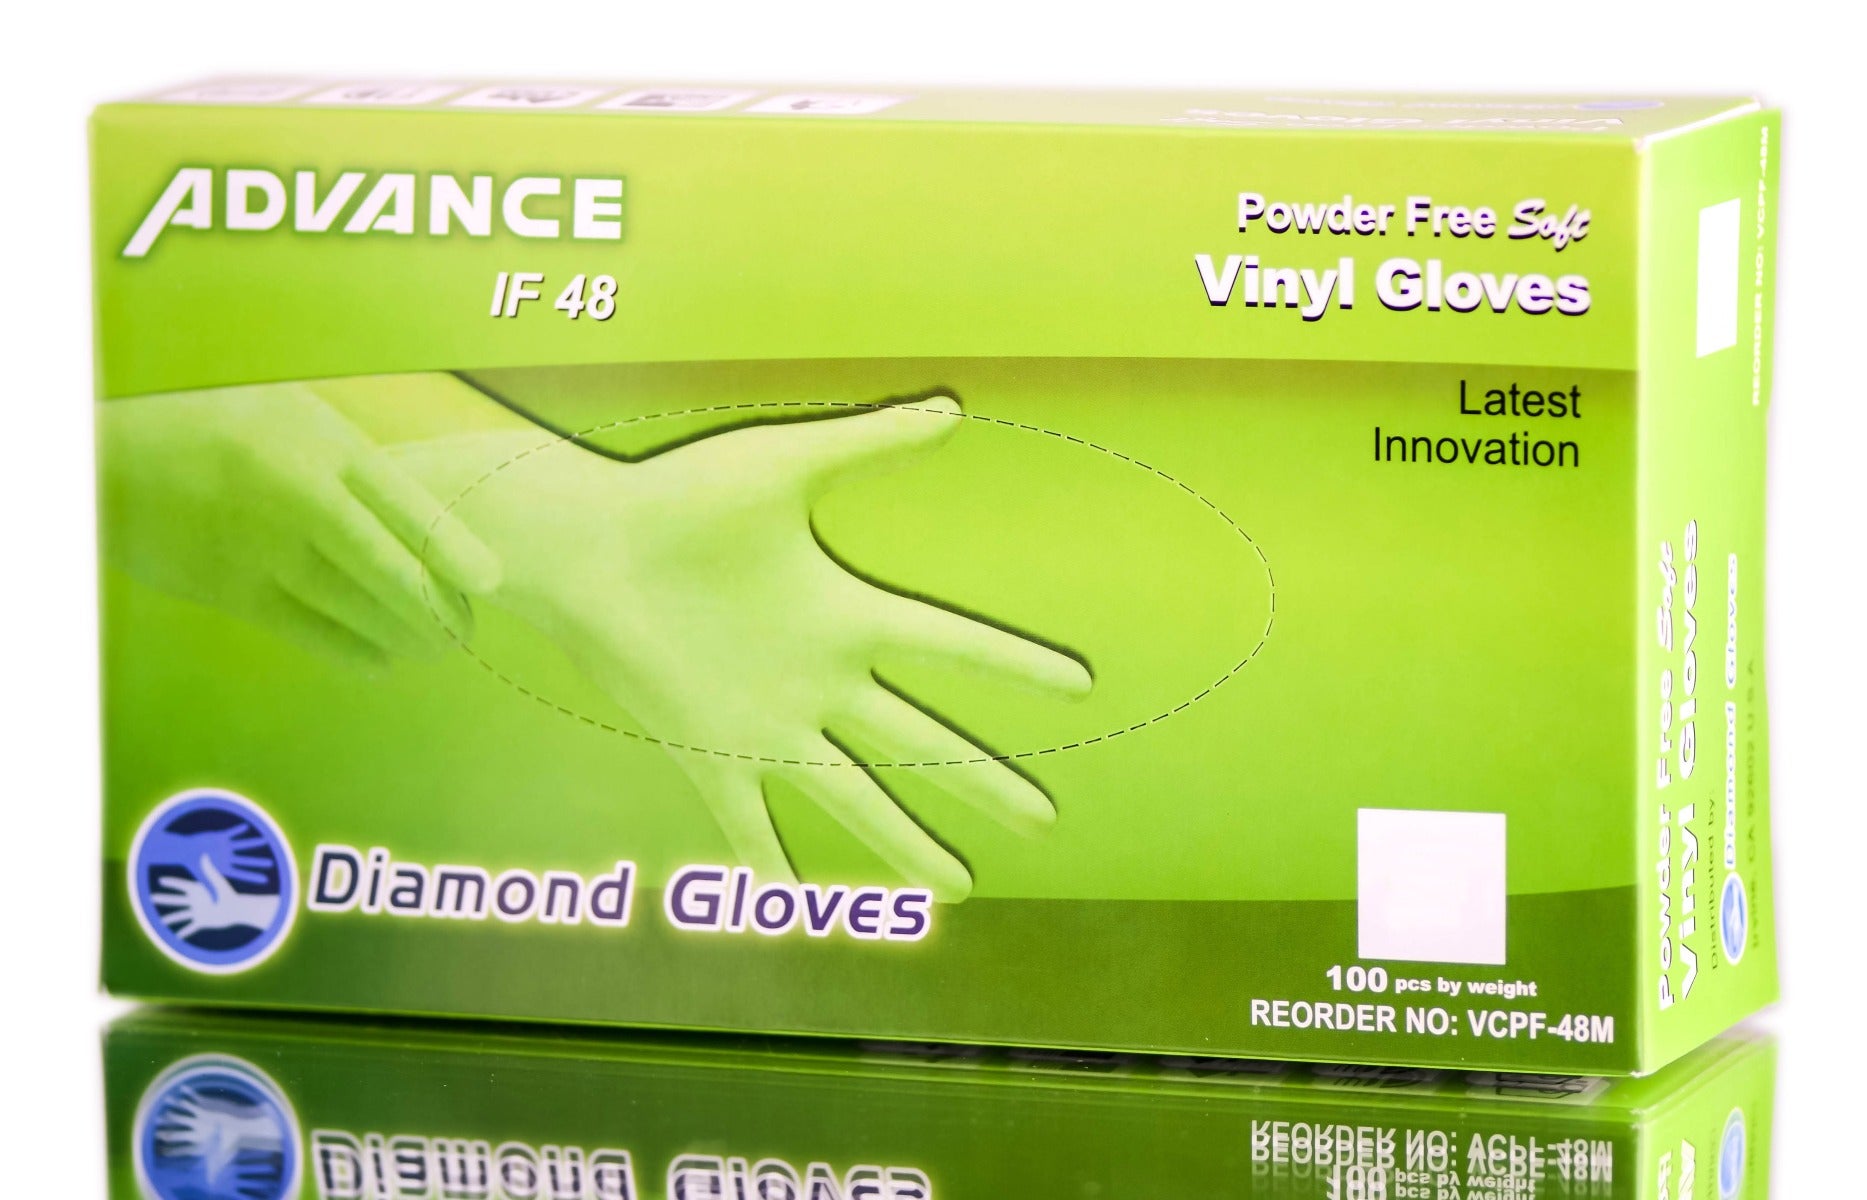 Diamond Glove Advance IF-48 Vinyl Powder-Free Glove - Large